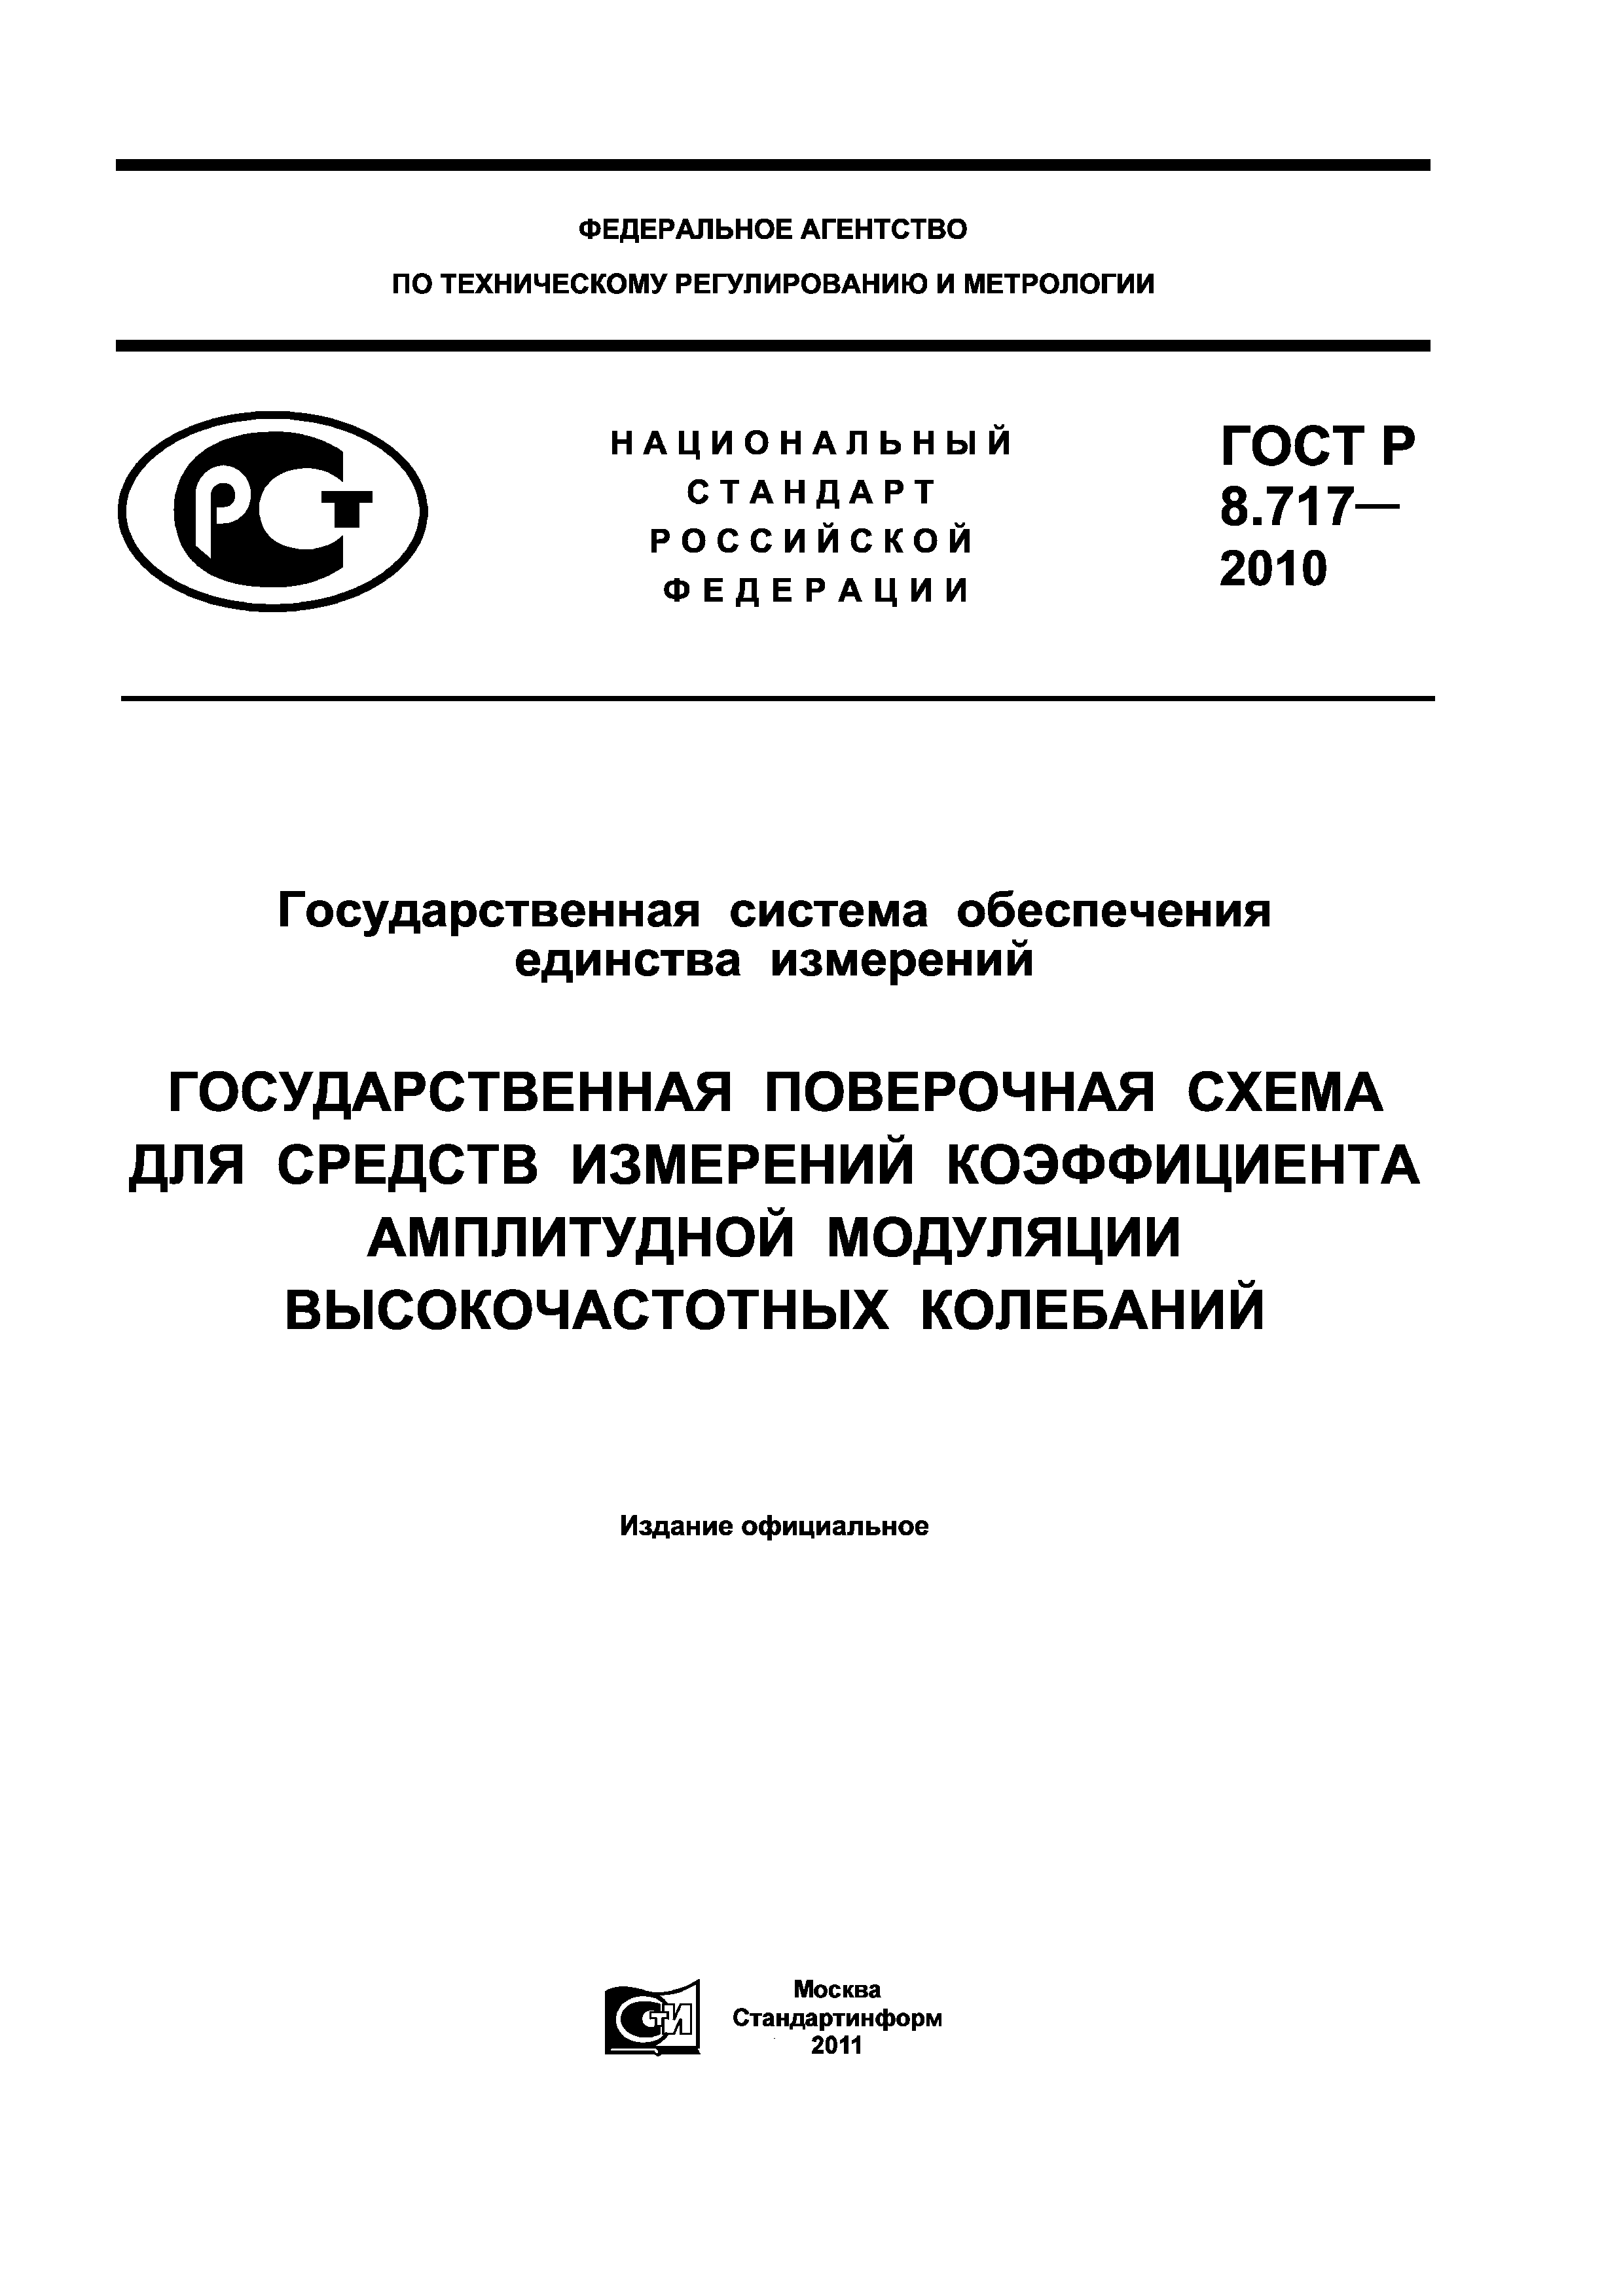 ГОСТ Р 8.717-2010